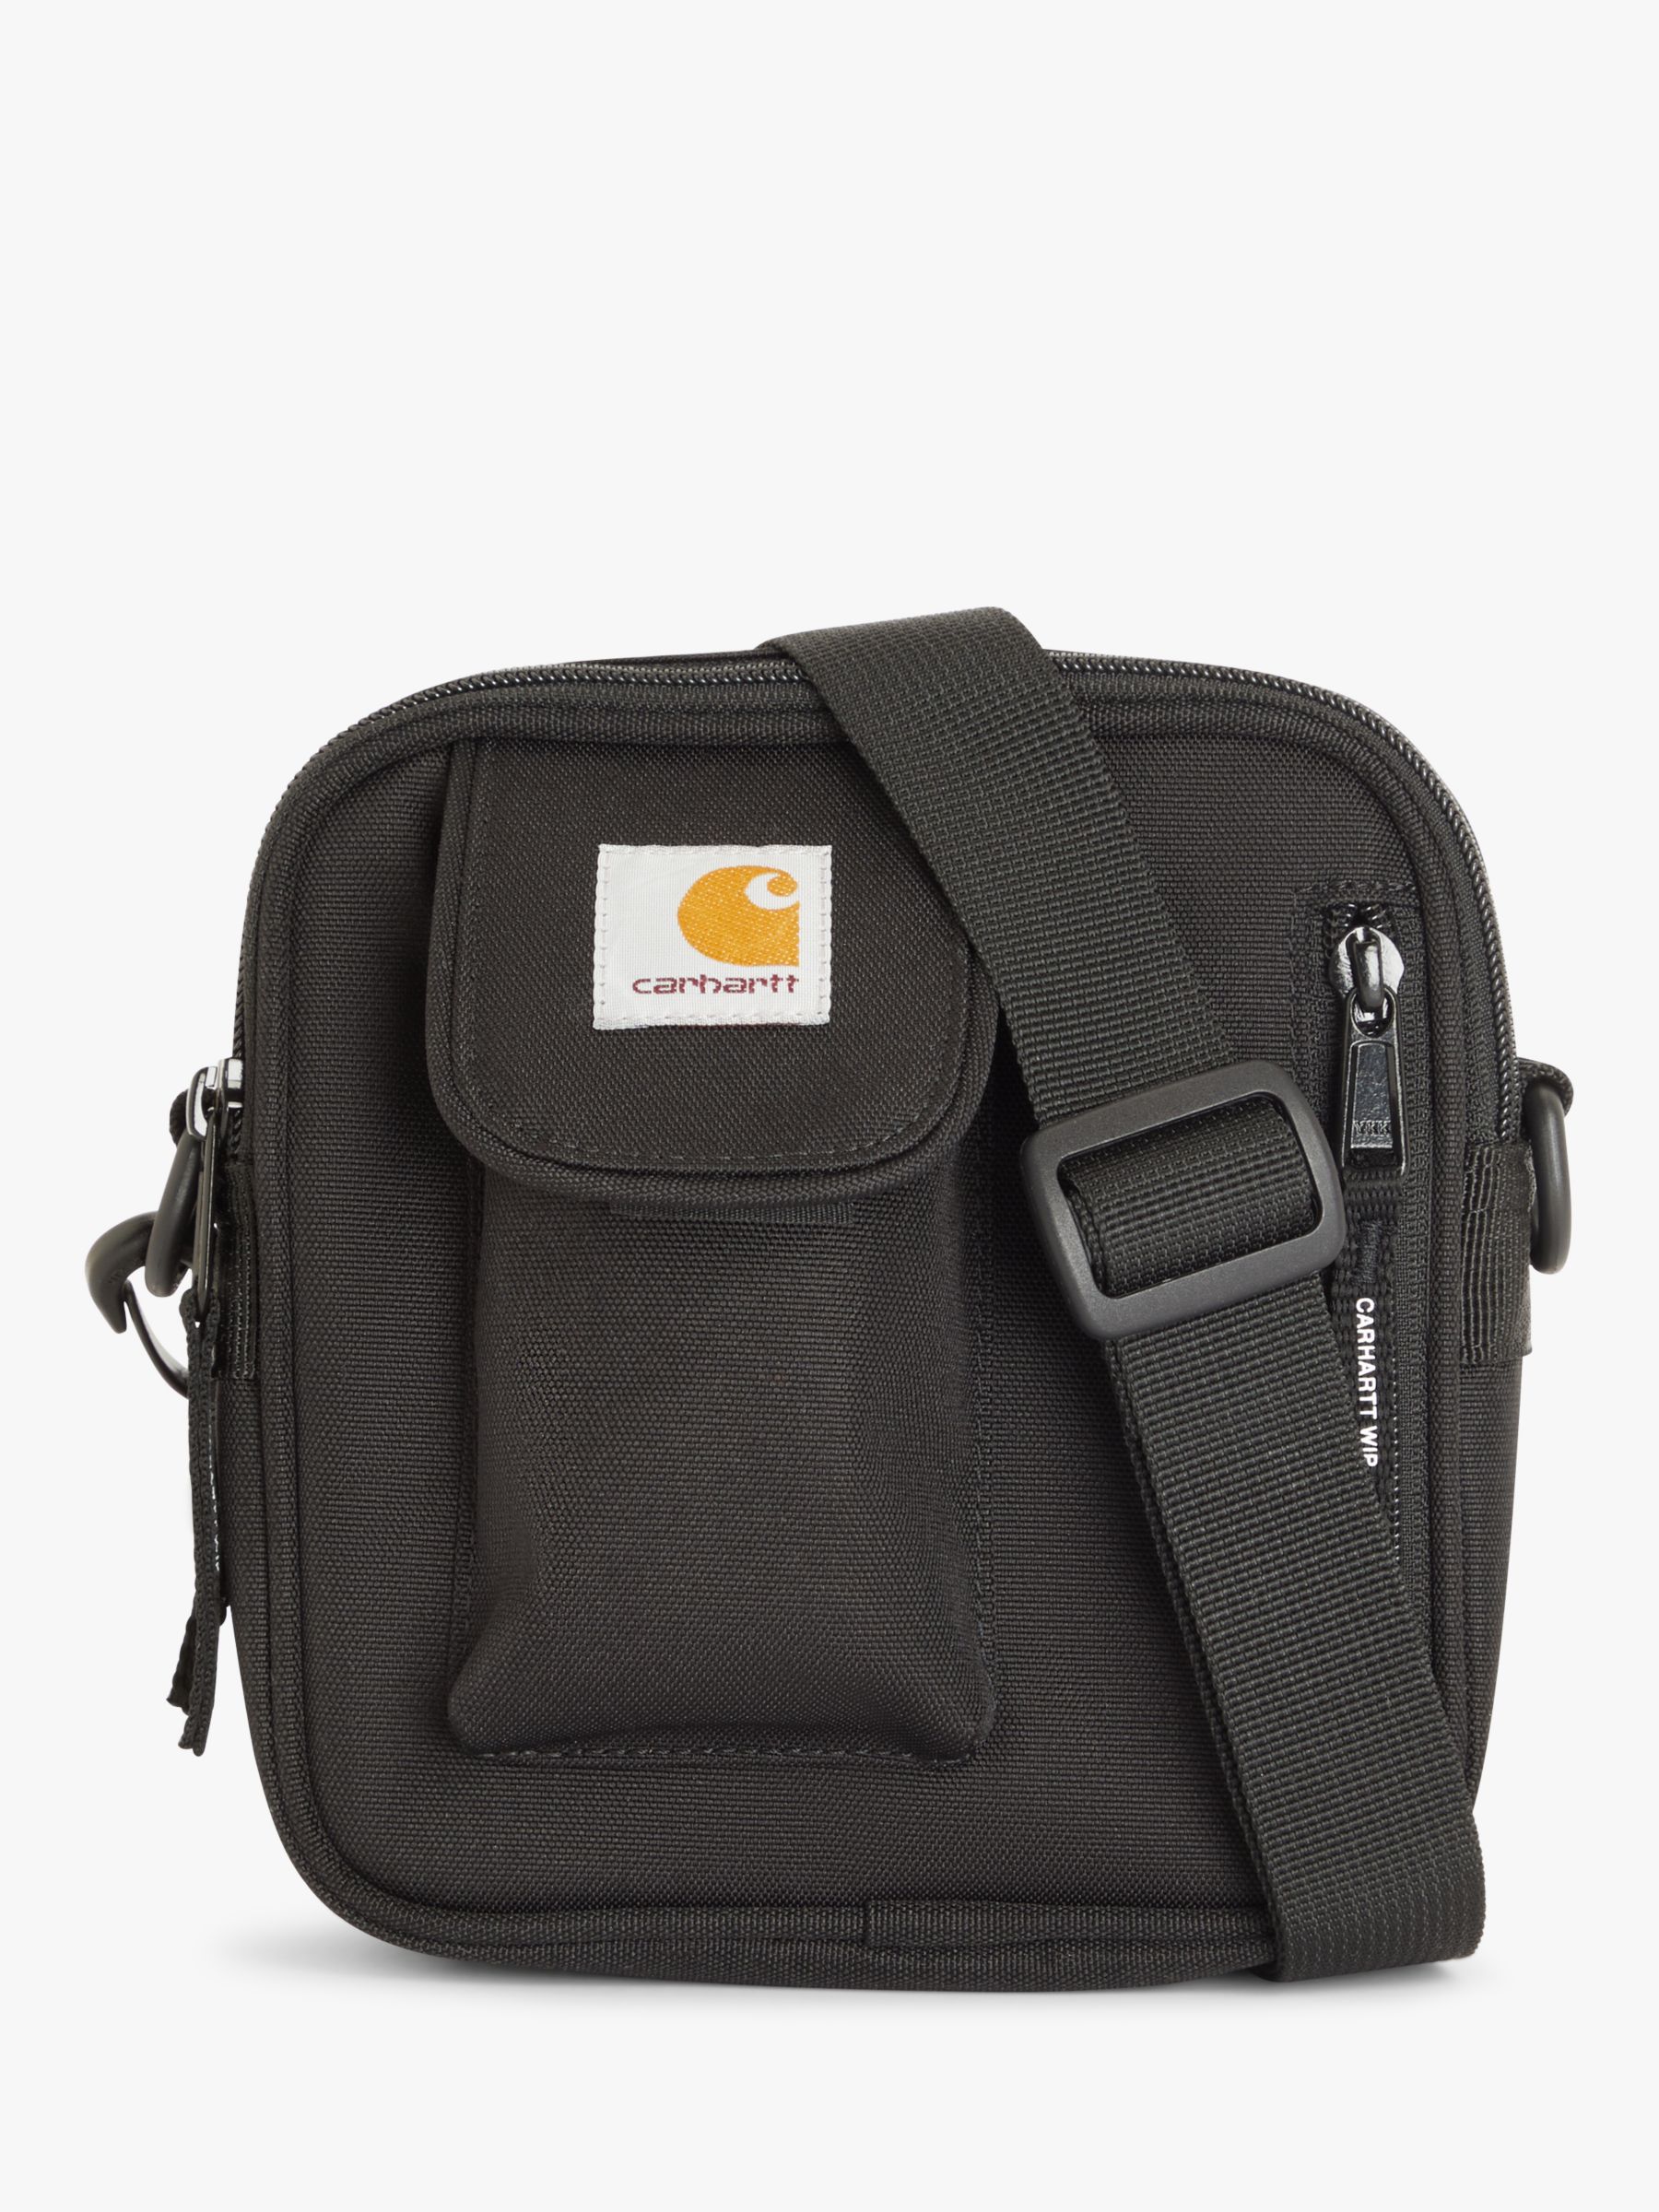 Carhartt WIP Essentials Cross Body Bag, Black at John Lewis & Partners